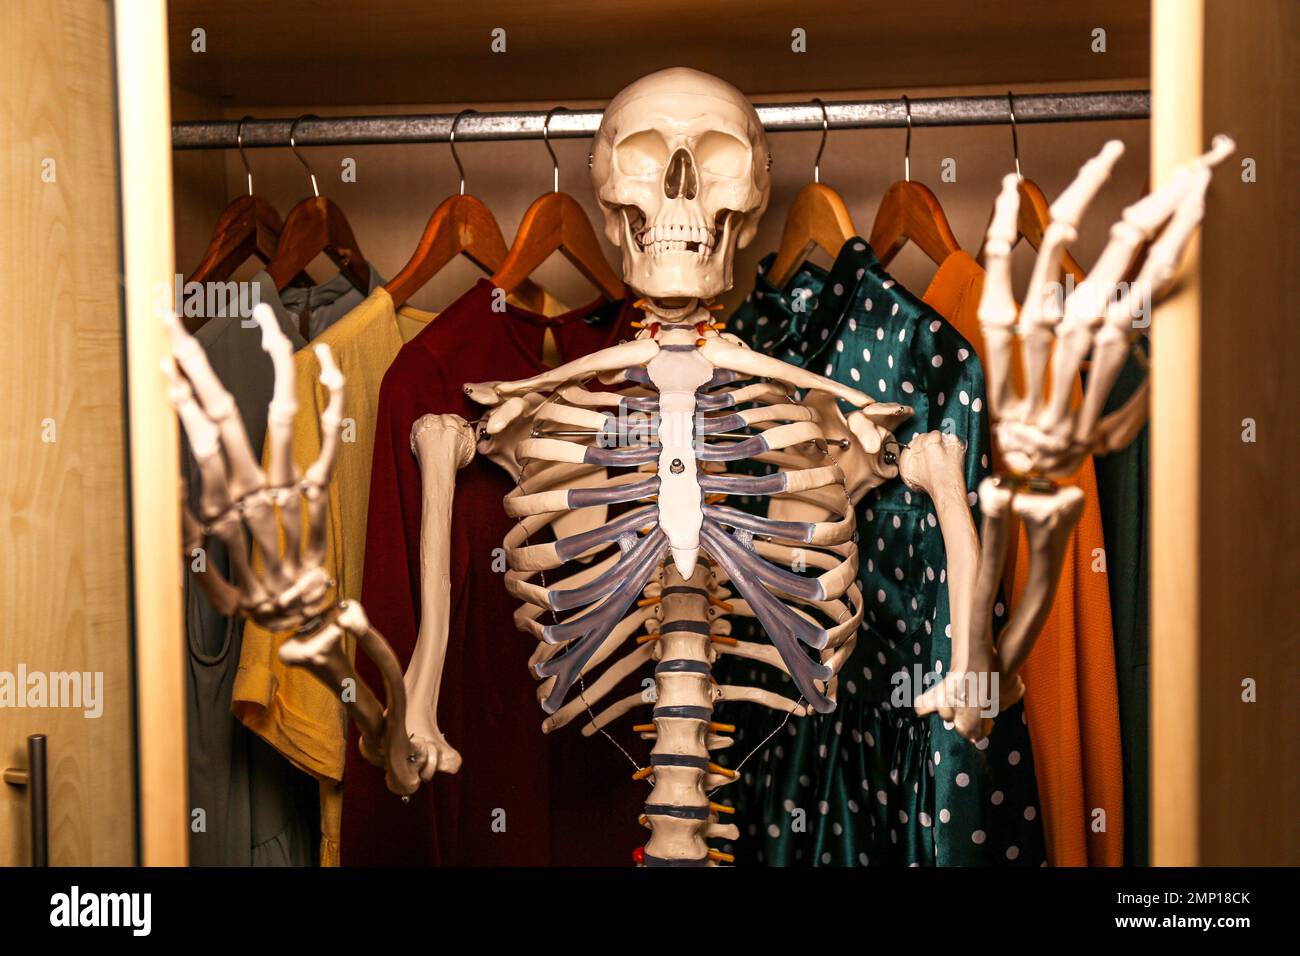 Skeletons in the lingerie closet